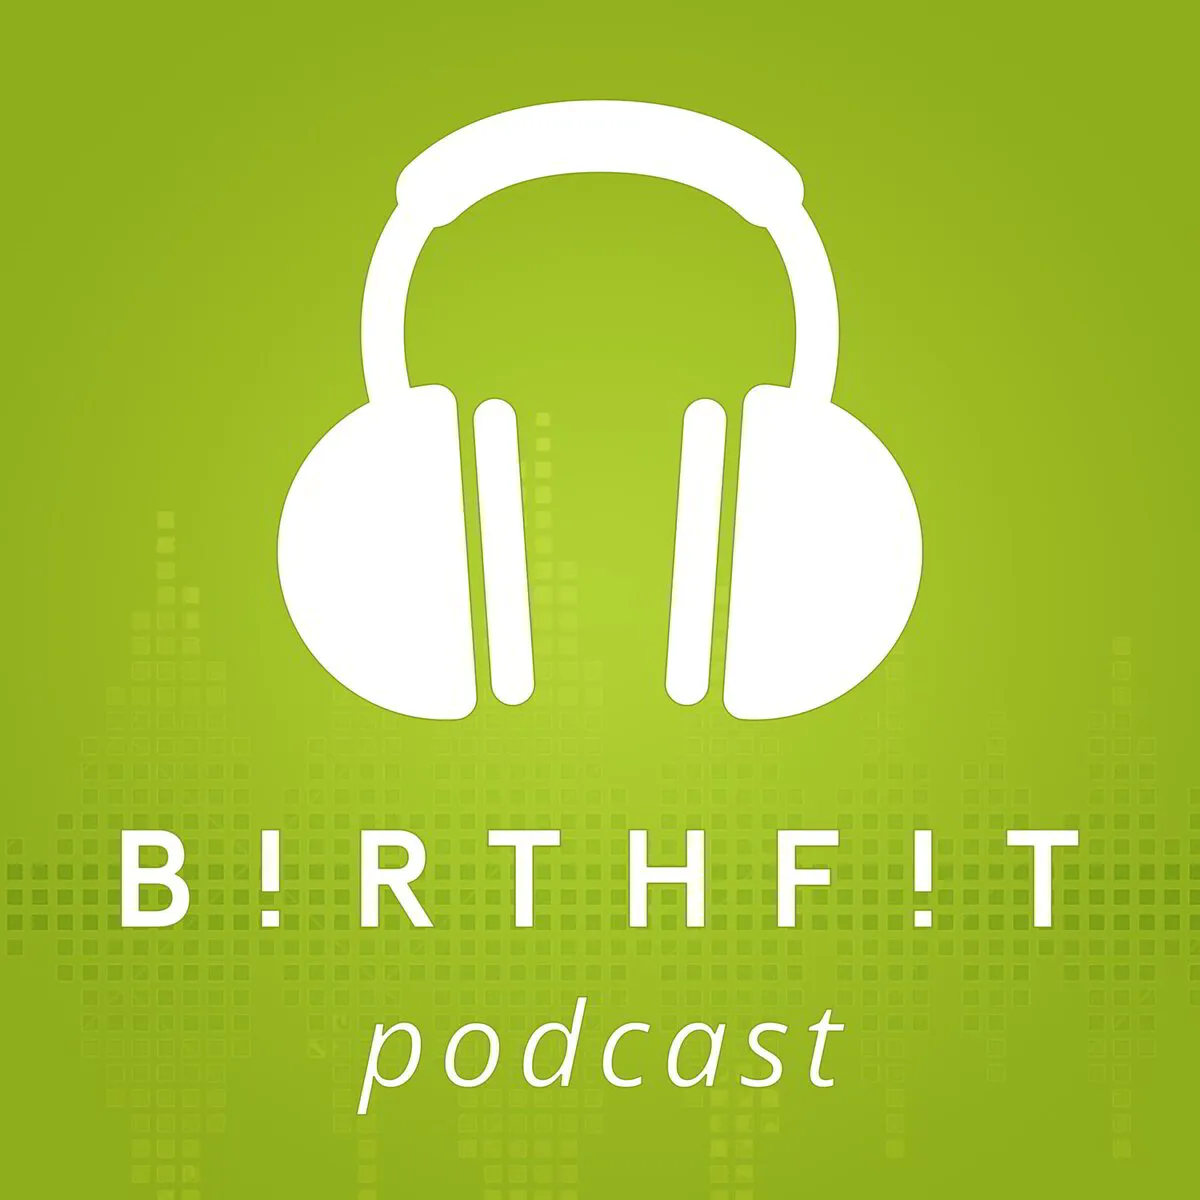 BIRTHFIT Podcast Episode 94 Featuring Brittany Anderson, BIRTHFIT Nashville Regional Director